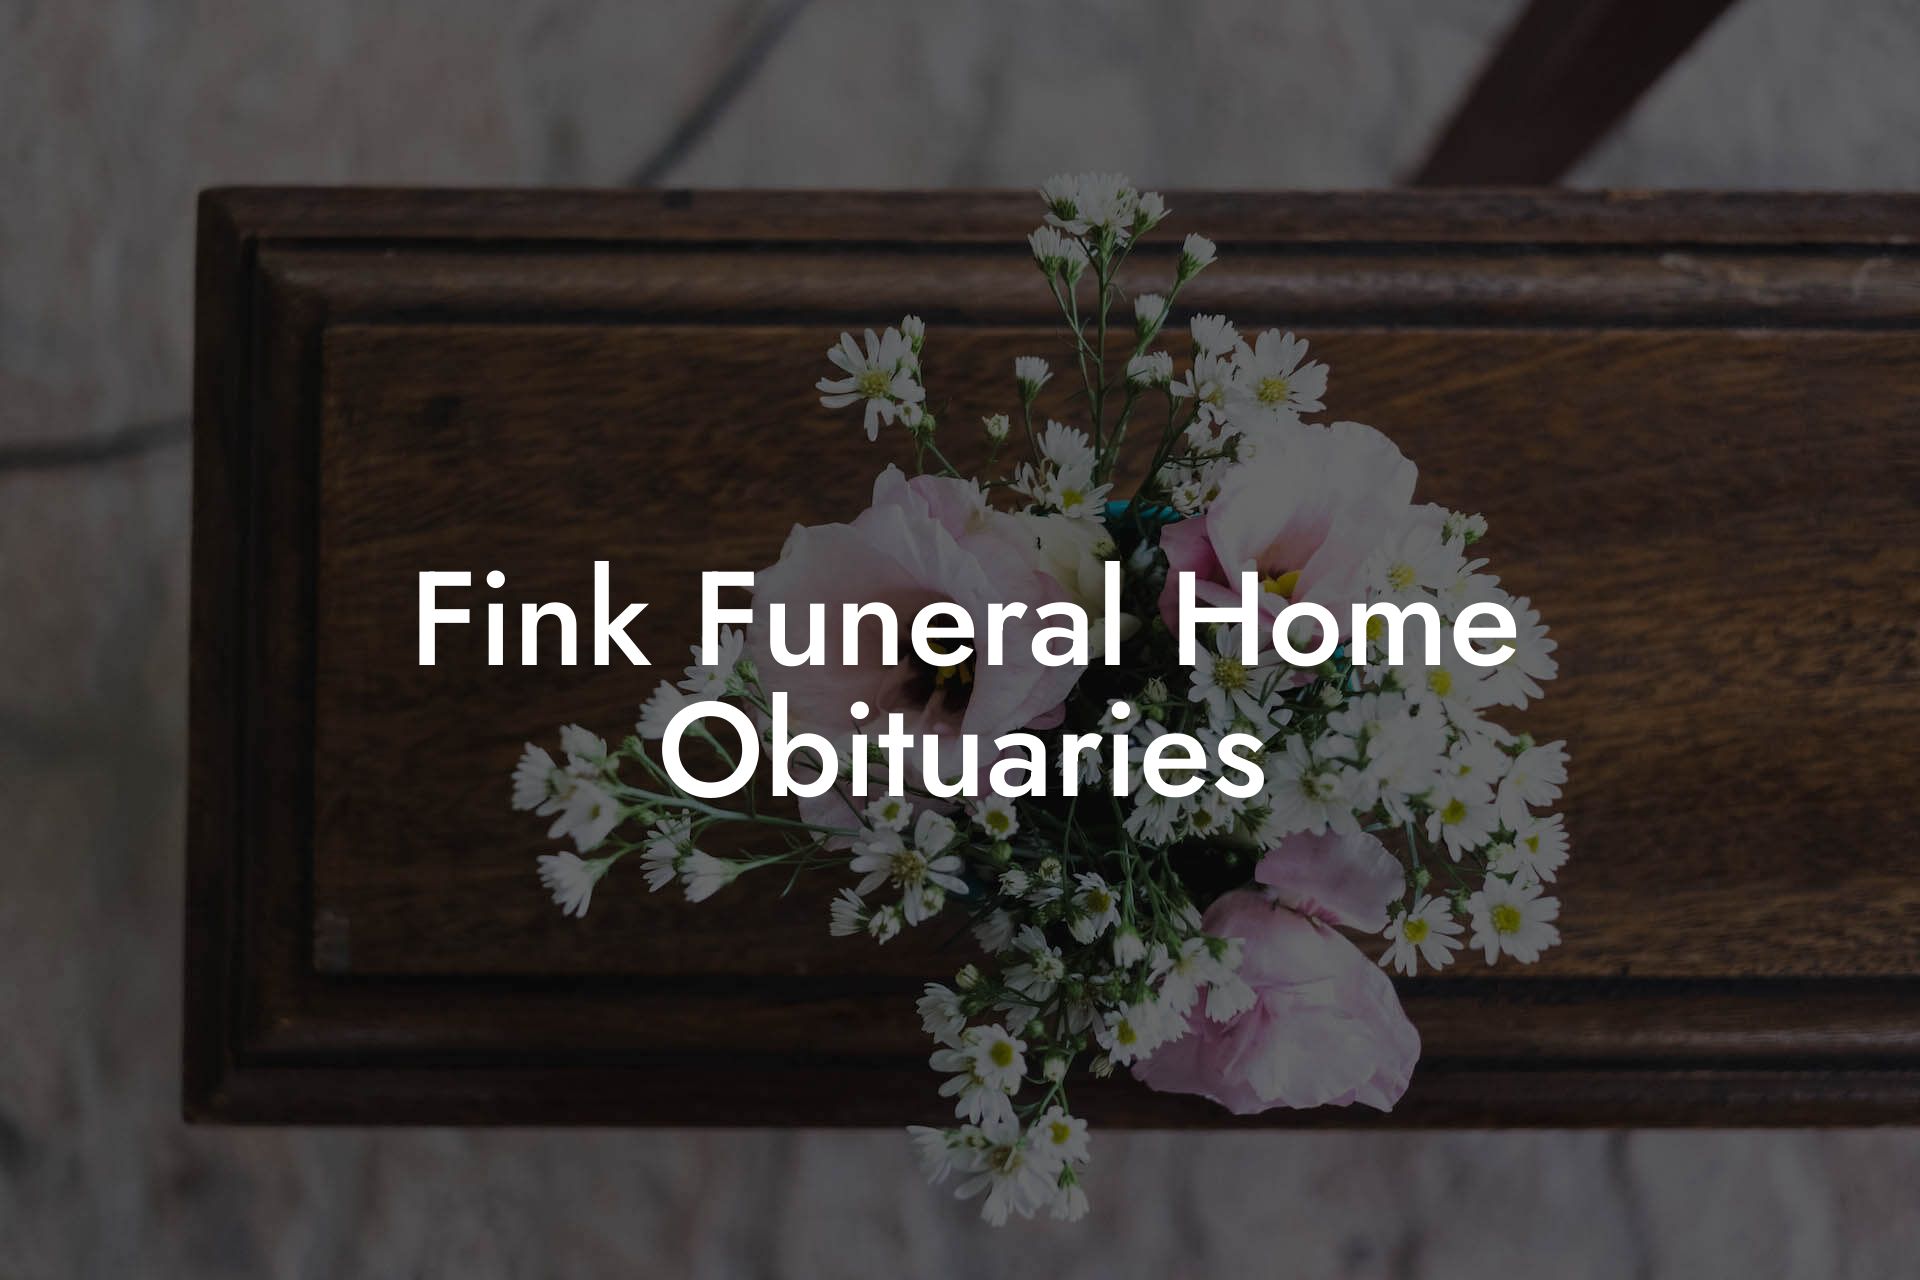 Fink Funeral Home Obituaries